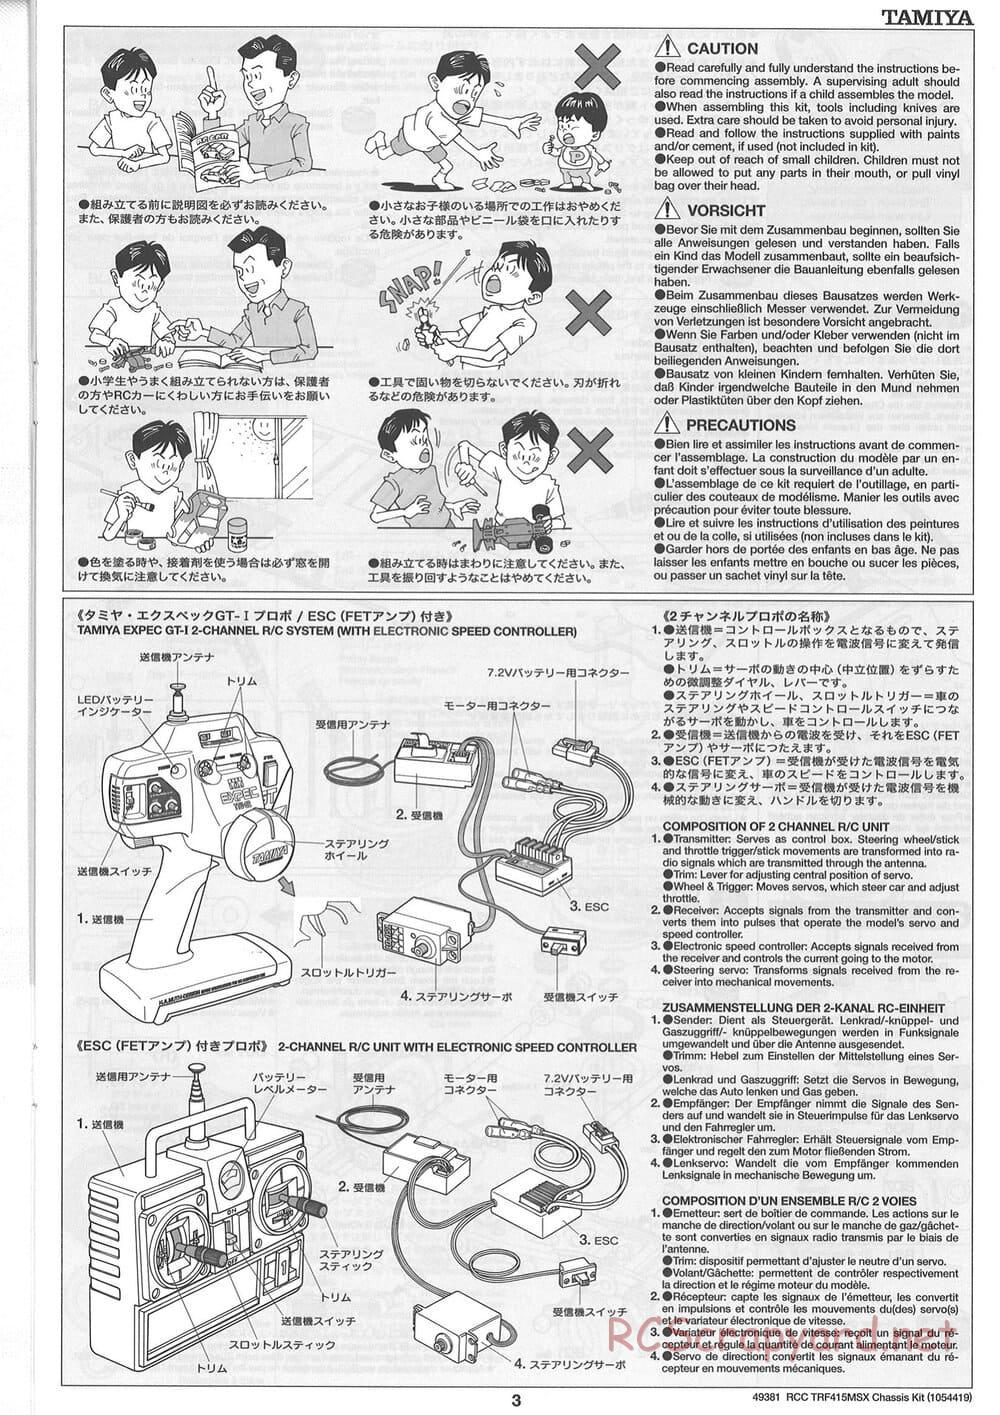 Tamiya - TRF415-MSX Chassis - Manual - Page 3